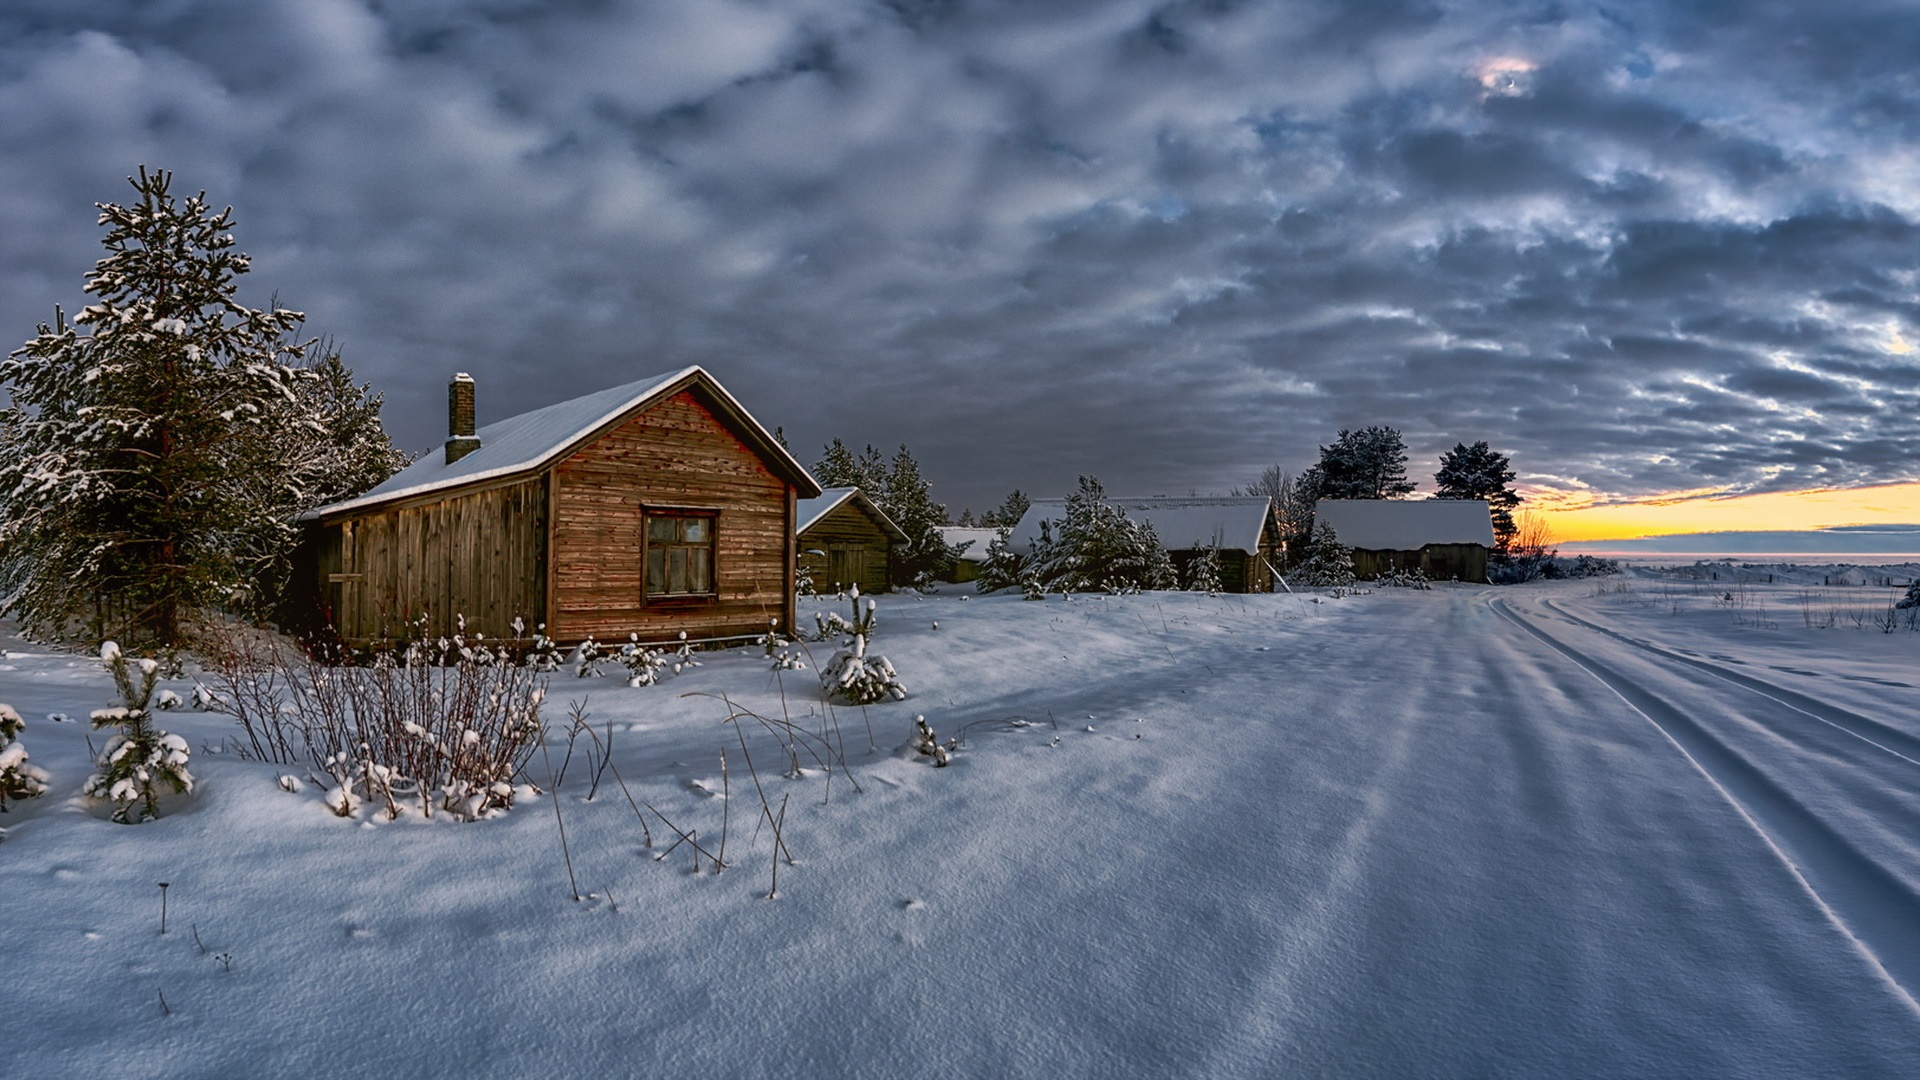 Winter-houses-snow-clouds-dusk_1920x1080.jpg